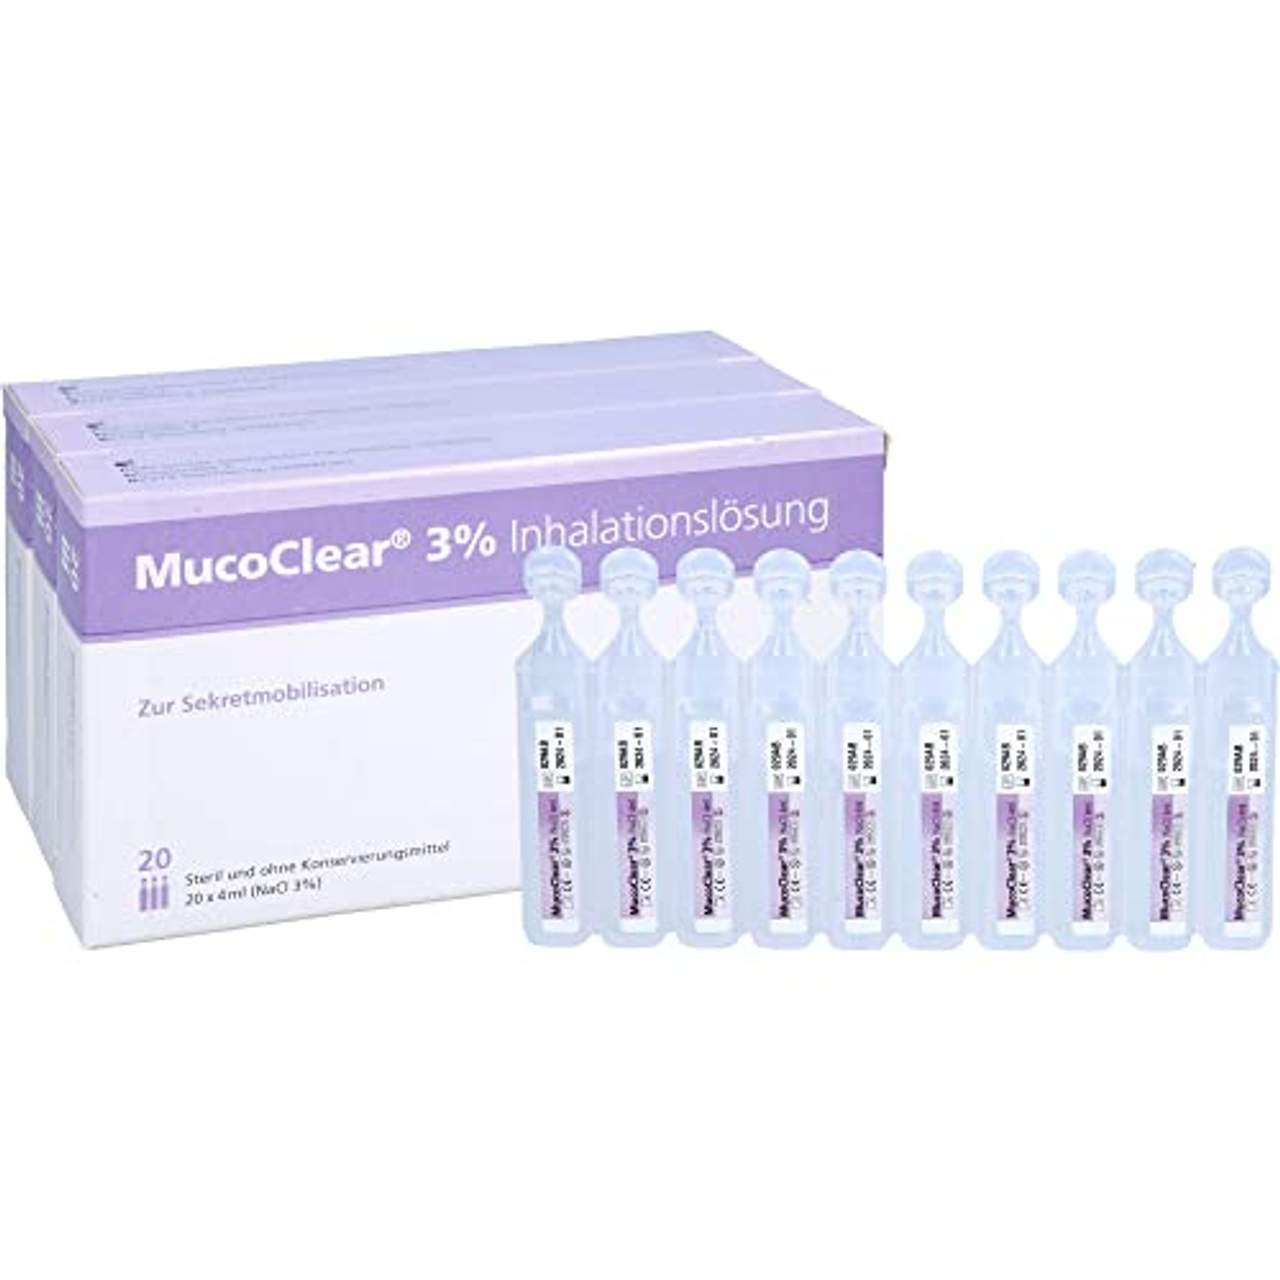 Mucoclear 3% NaCl Inhalationslösung